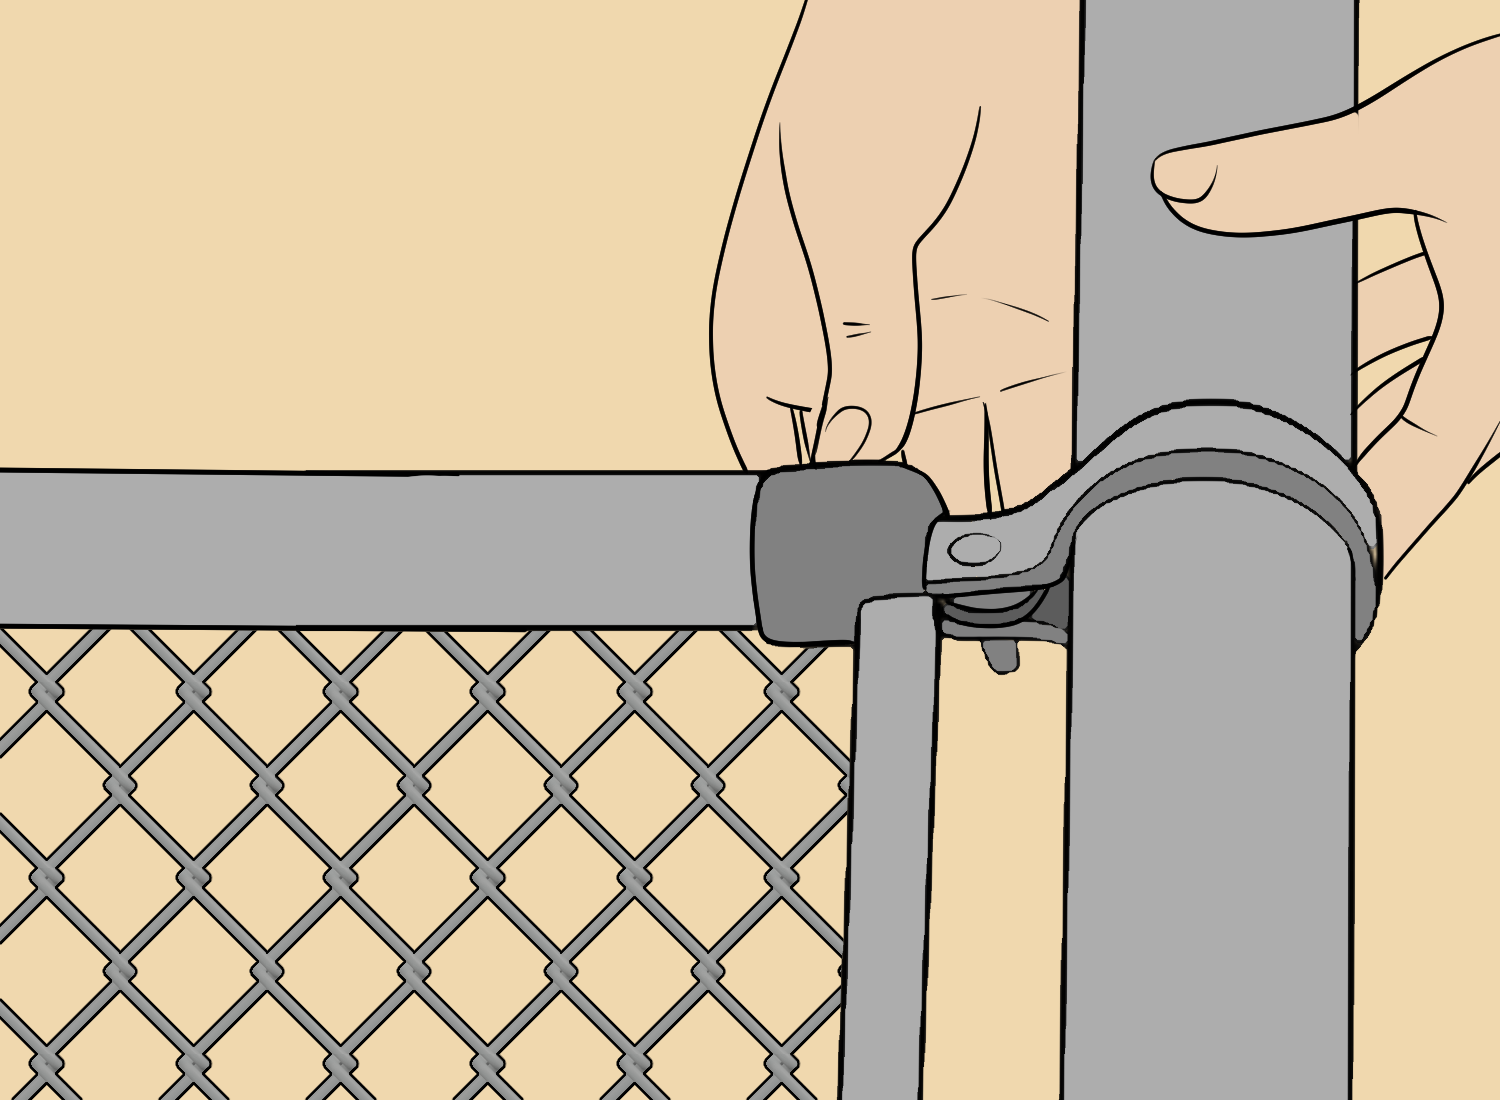 Remove fence posts